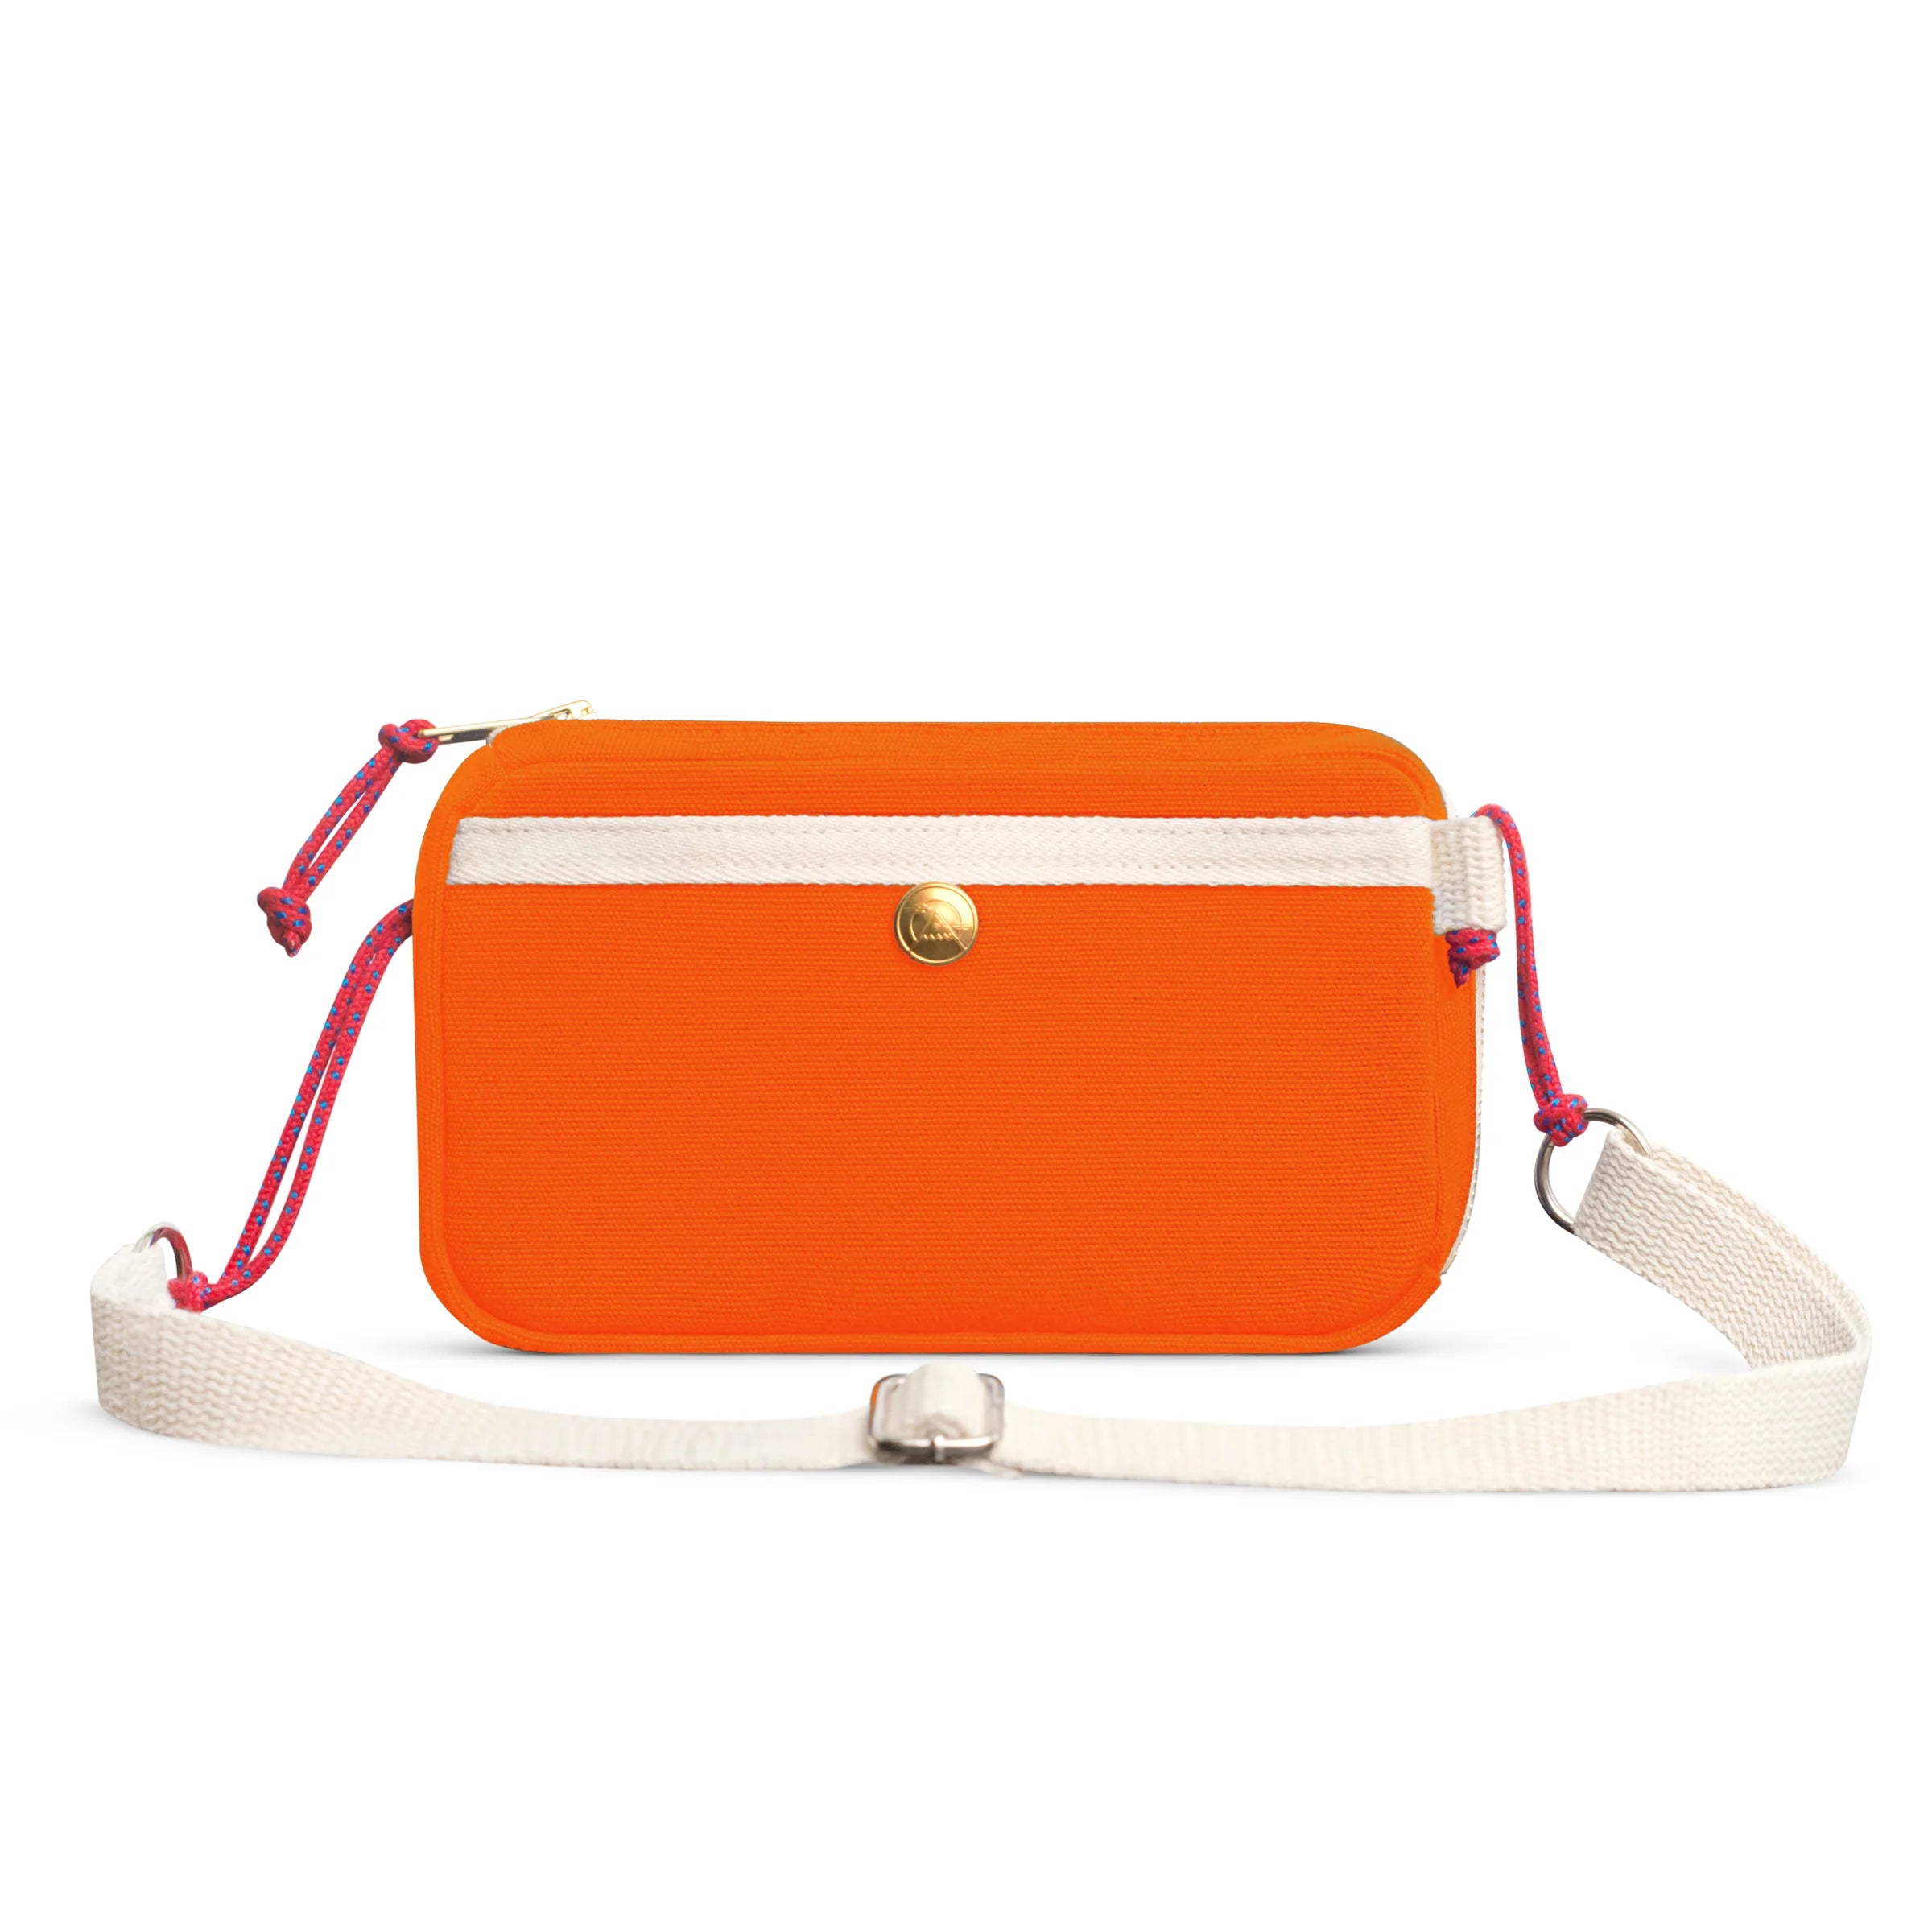 YKRA Travel Case - Orange